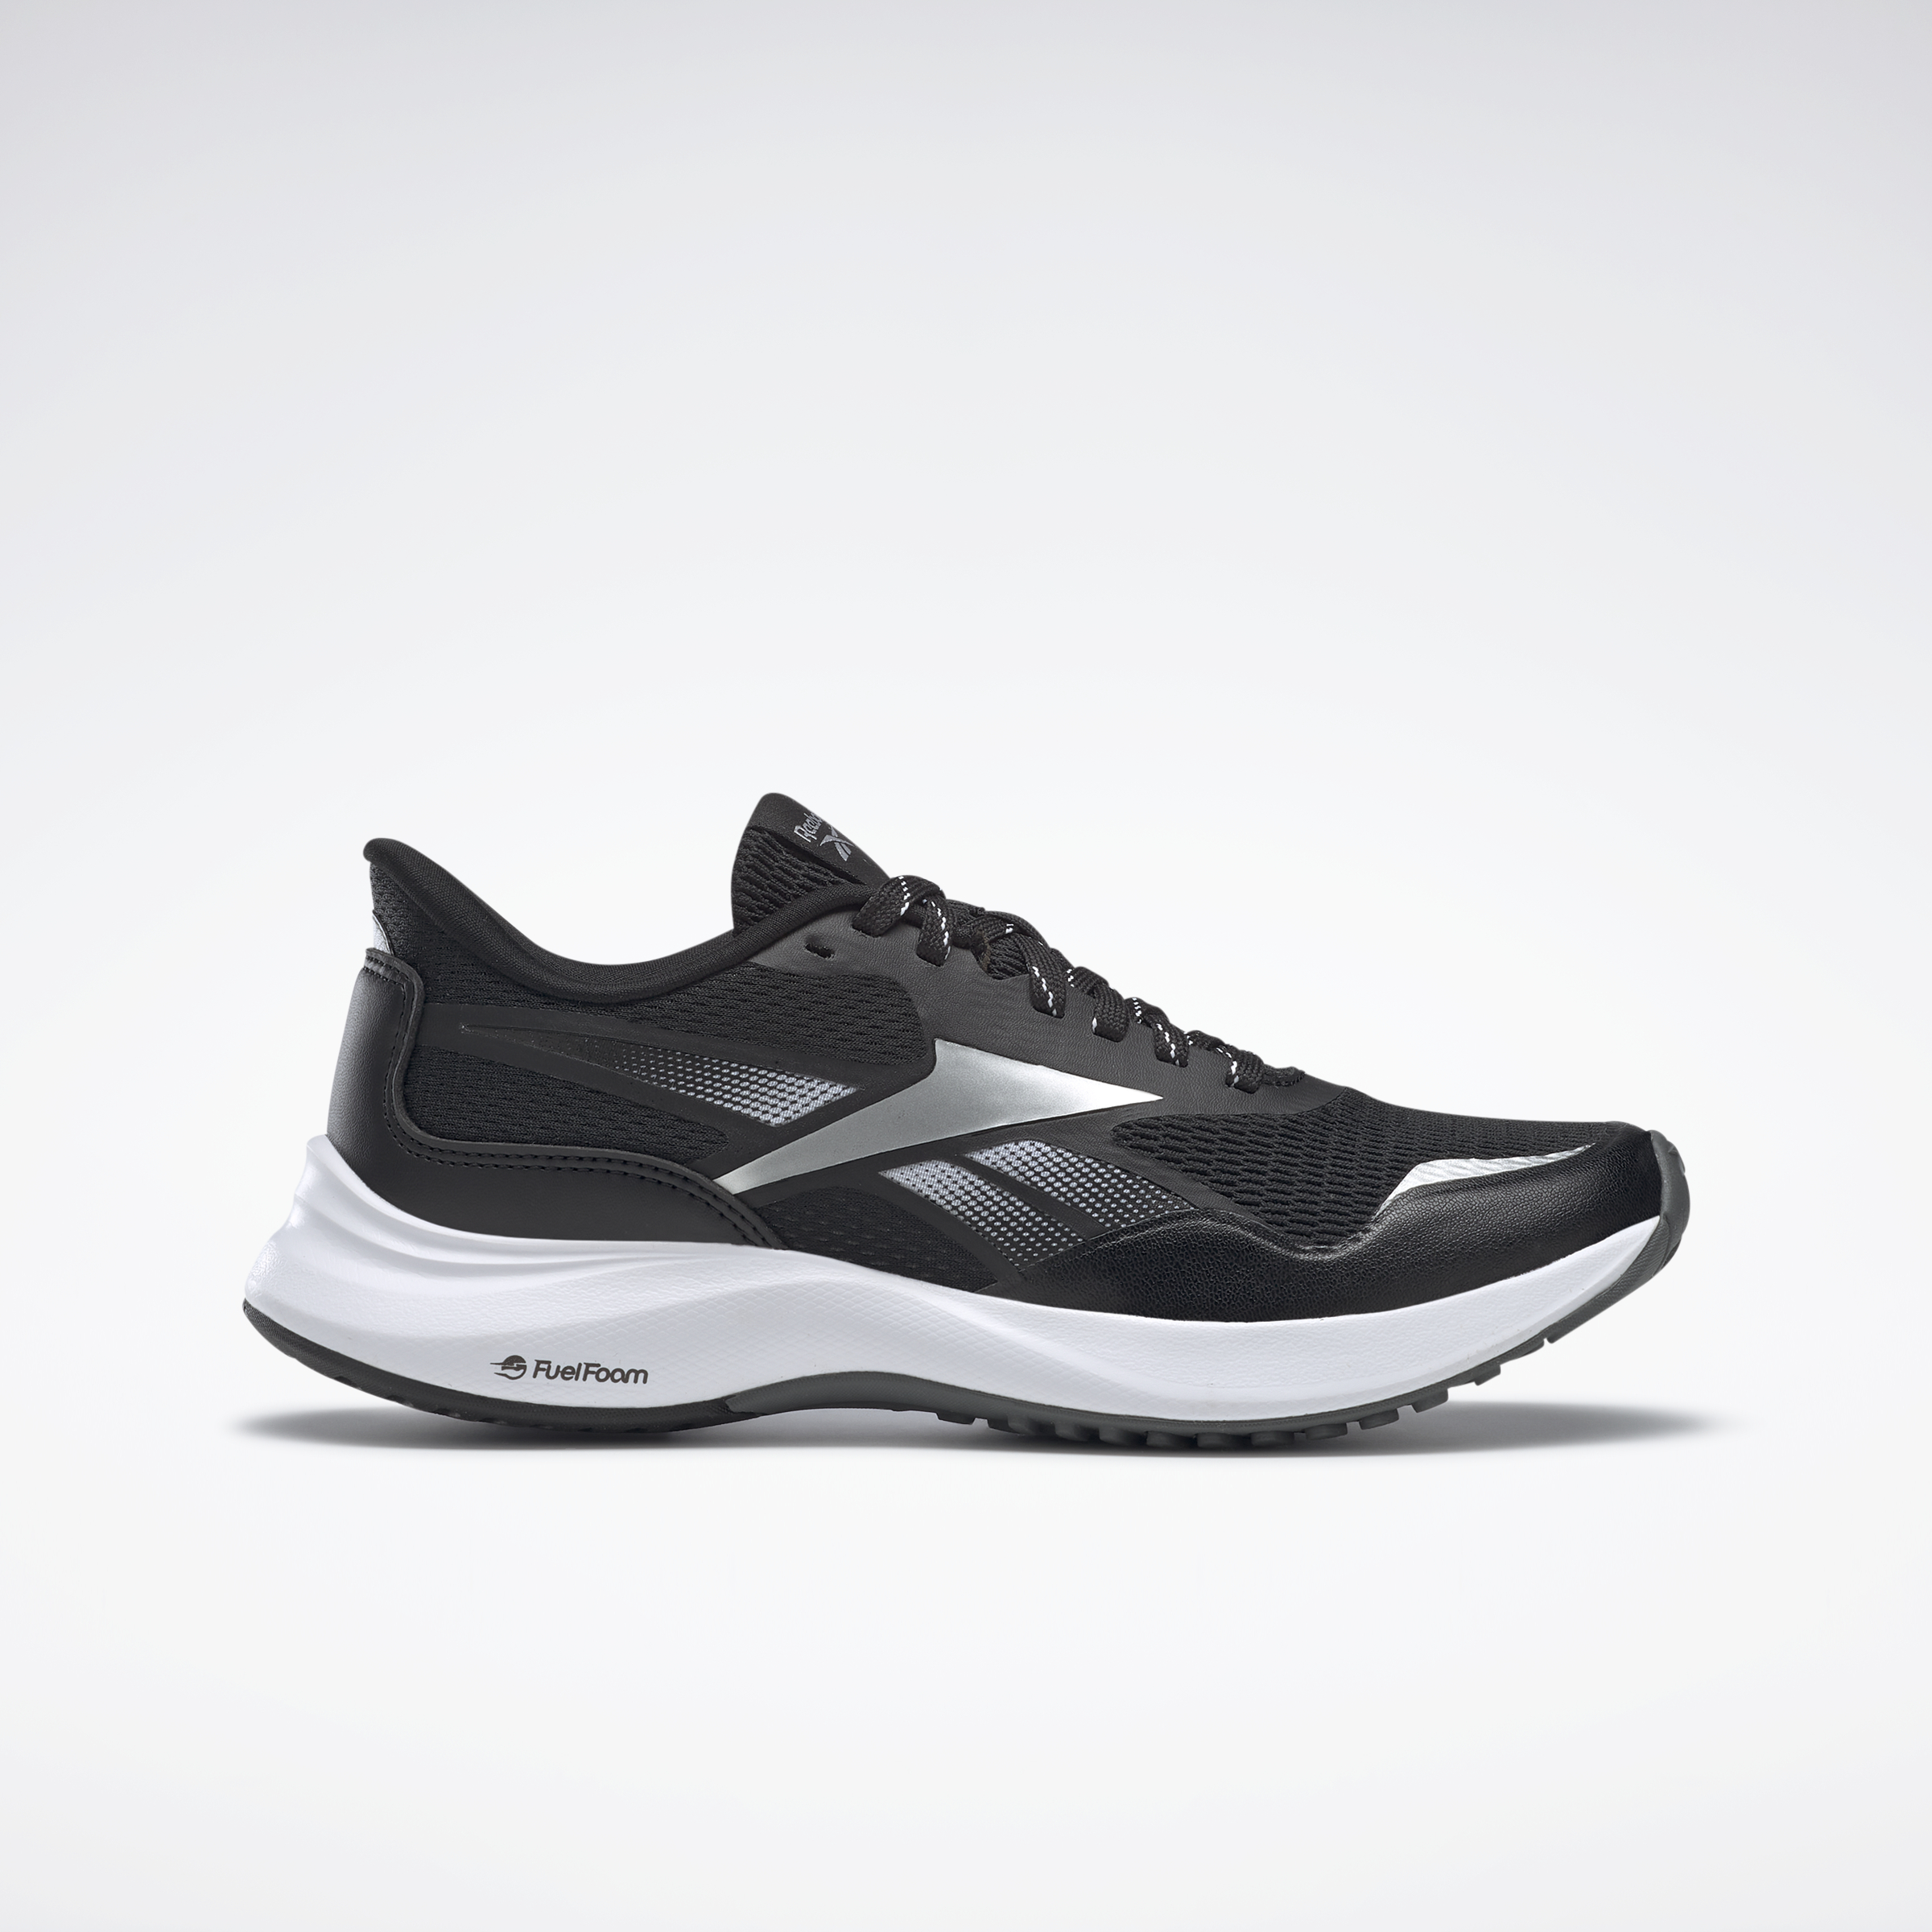 Reebok: Women's Endless Road 3 Running Shoes or Men's Daystart Shoes $29.75 + Free Shipping